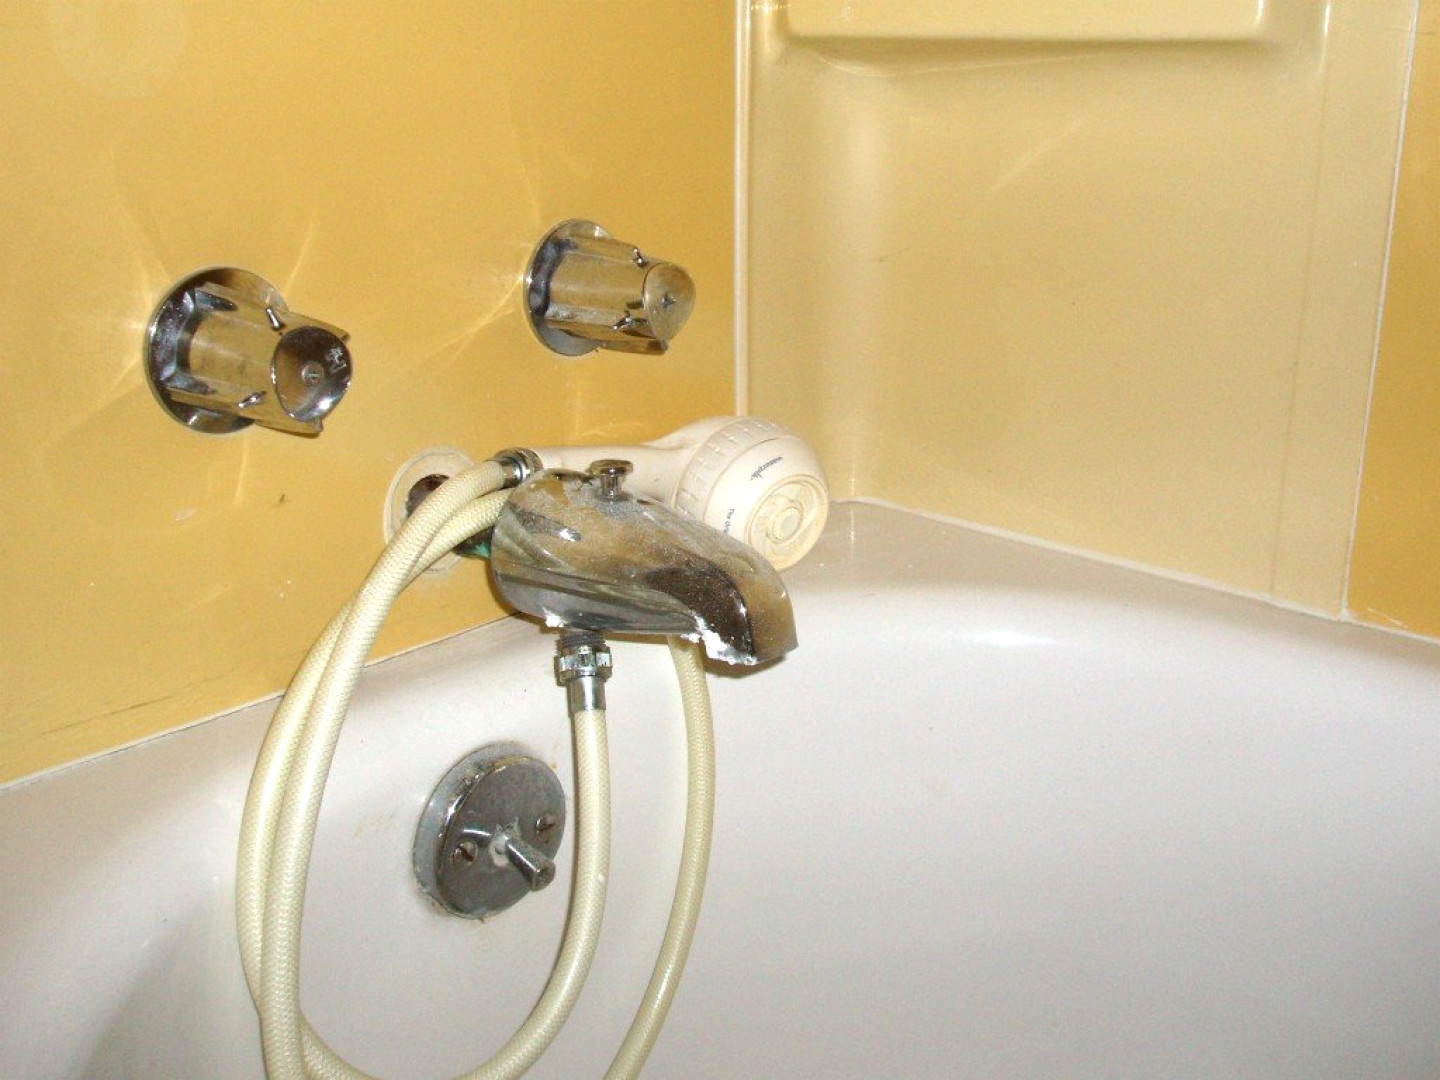 Shower Hose Adapter For The Bathtub Faucet Faucet Ideas Site